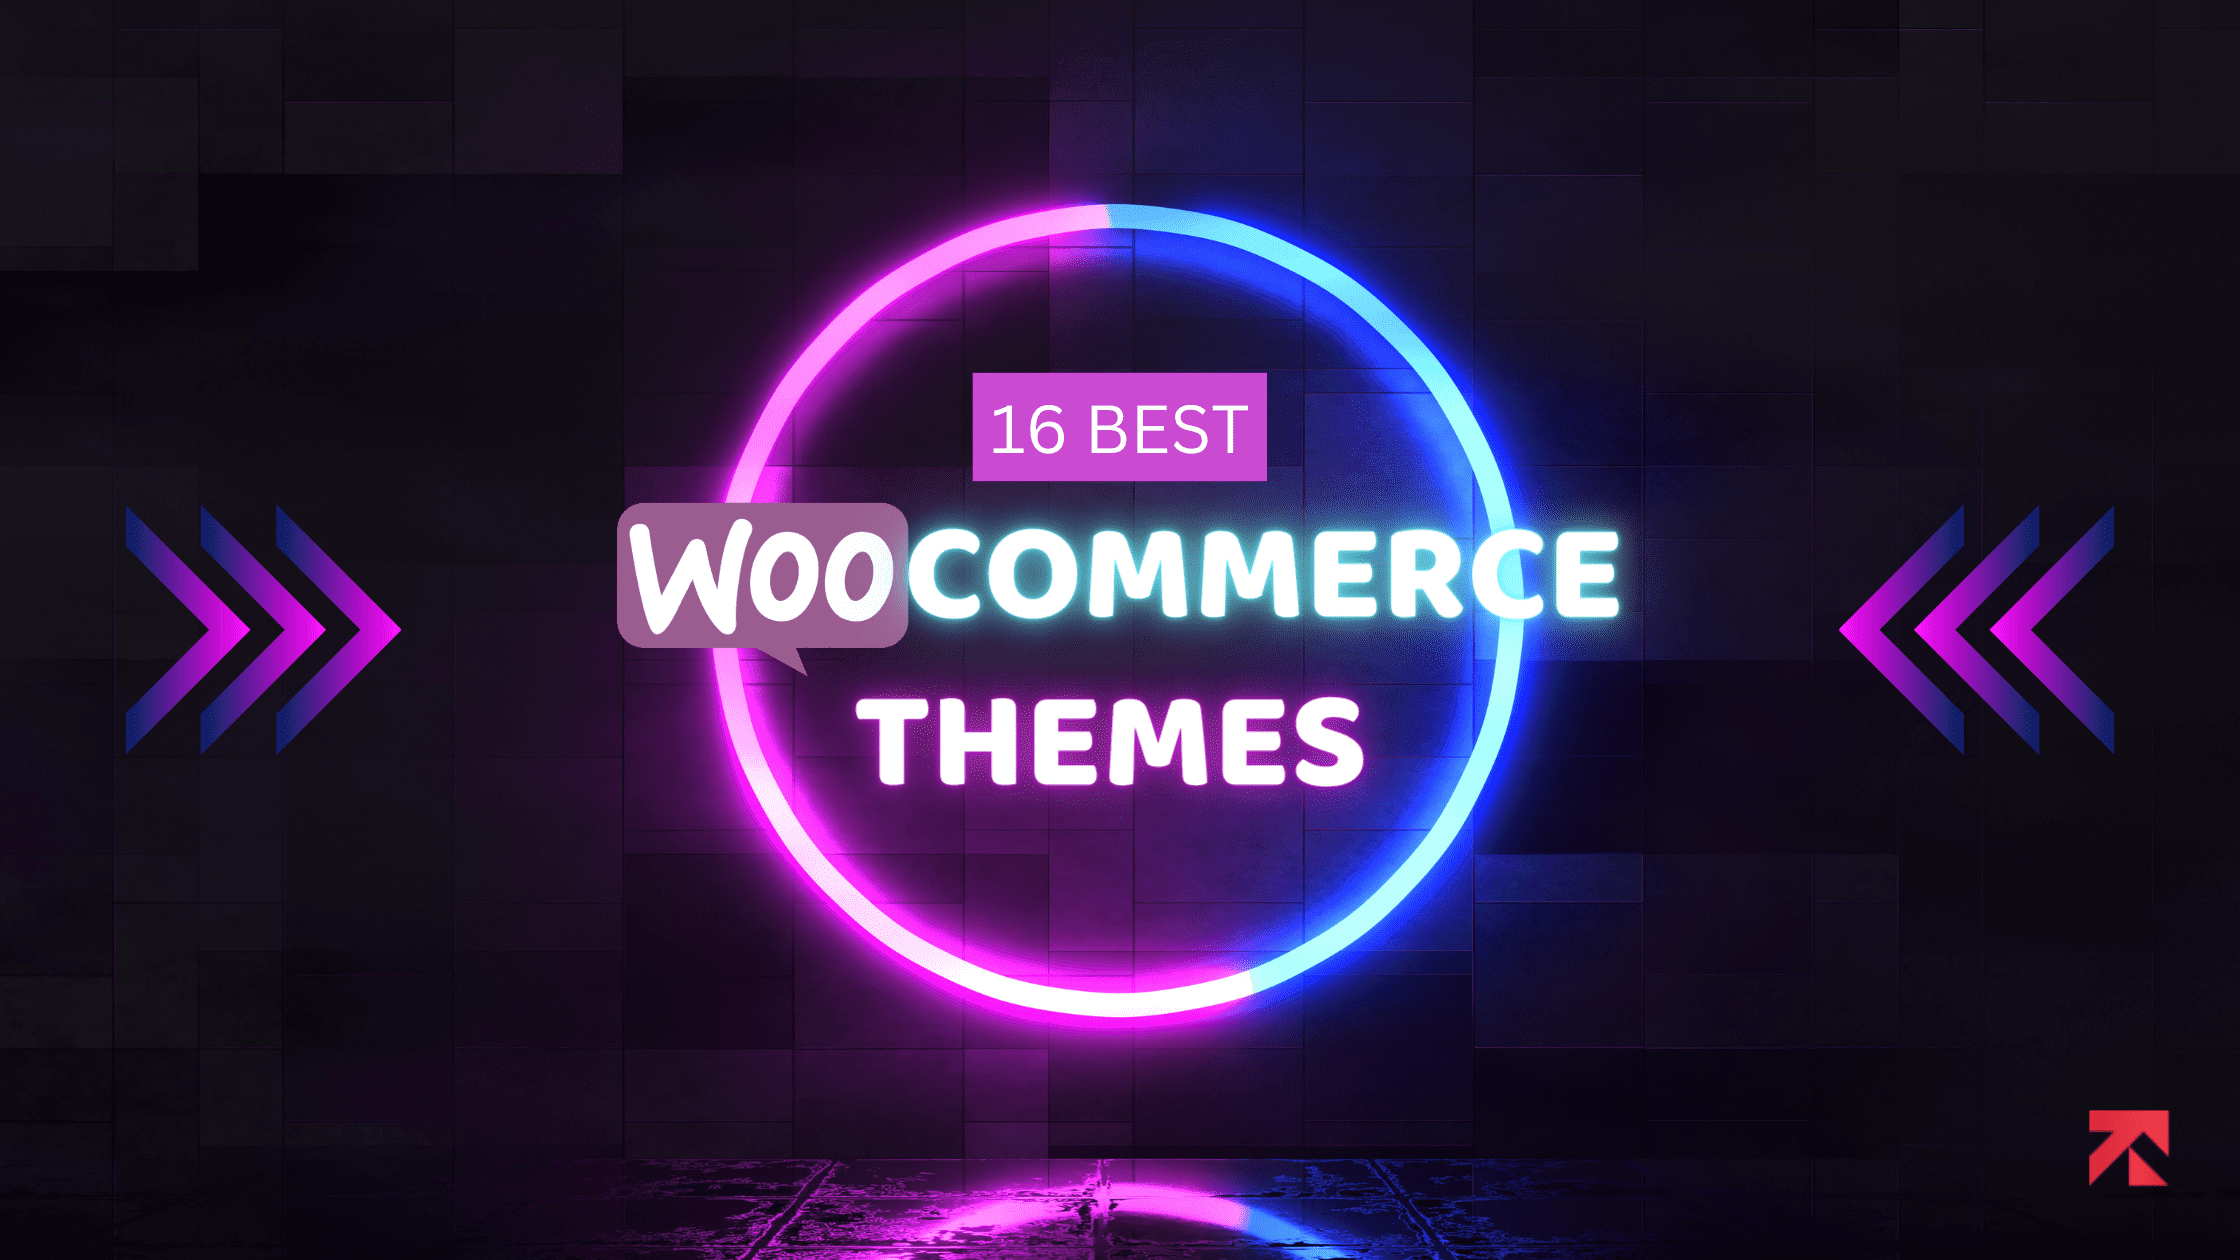 16-BEST-woocommerce-themes